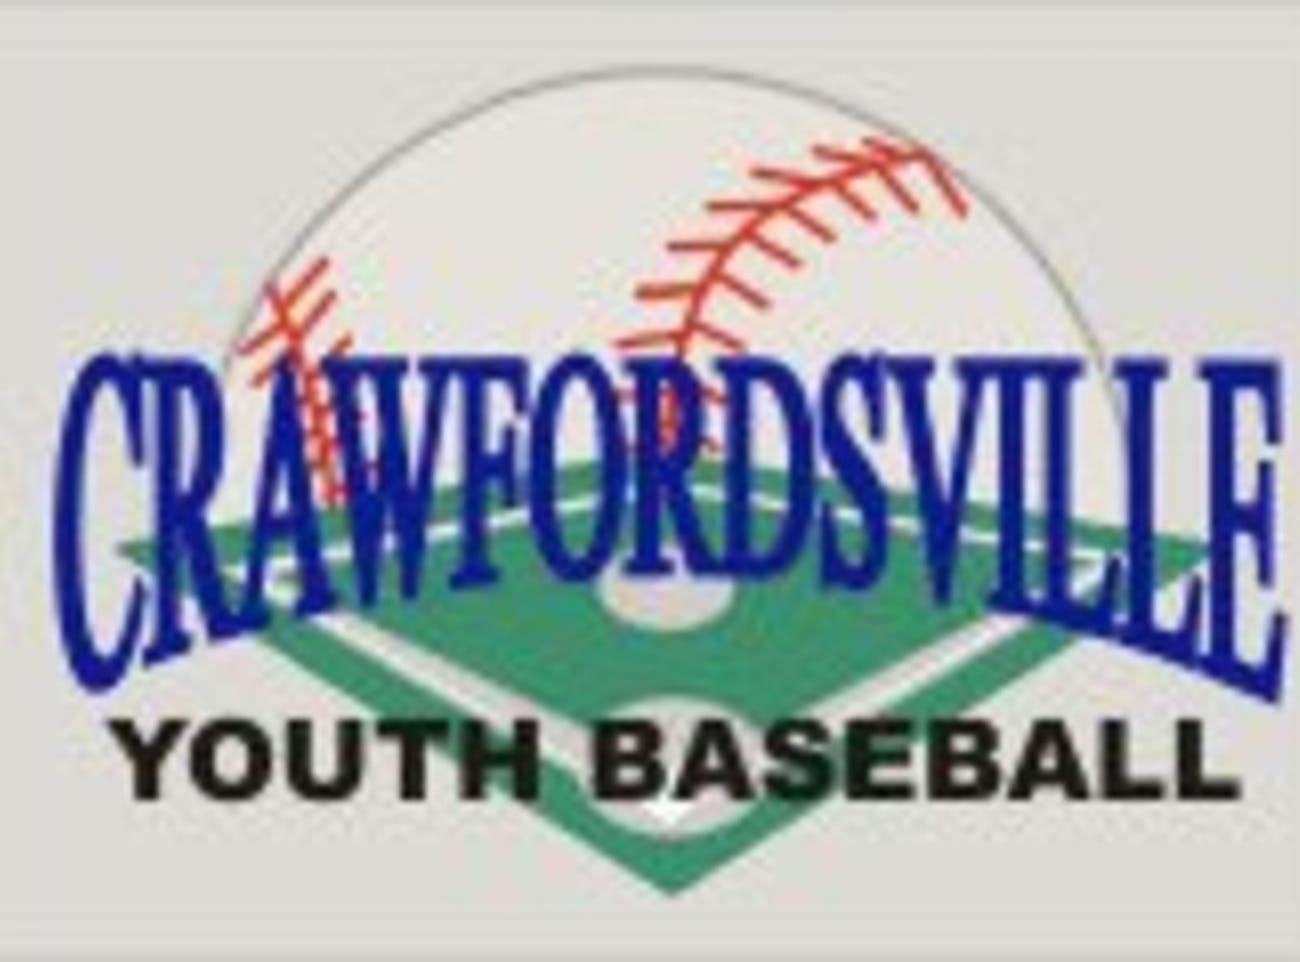 Crawfordsville Logo - Crawfordsville Youth Baseball | SCHWAN'S CARES™